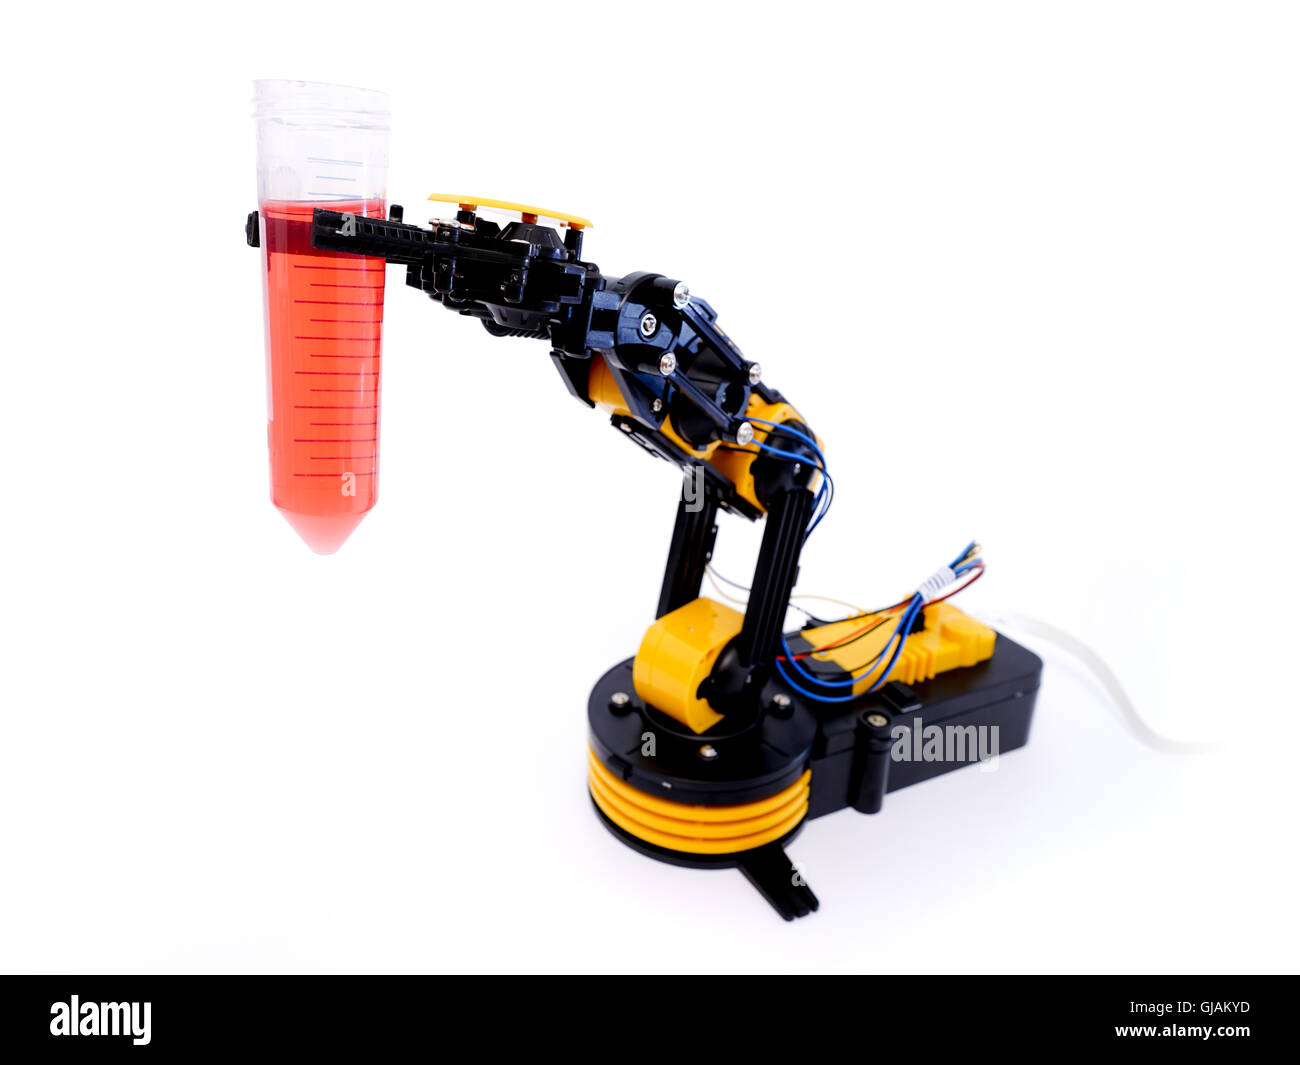 Plastic model of industrial robotics arm  Robot manipulator Stock Photo